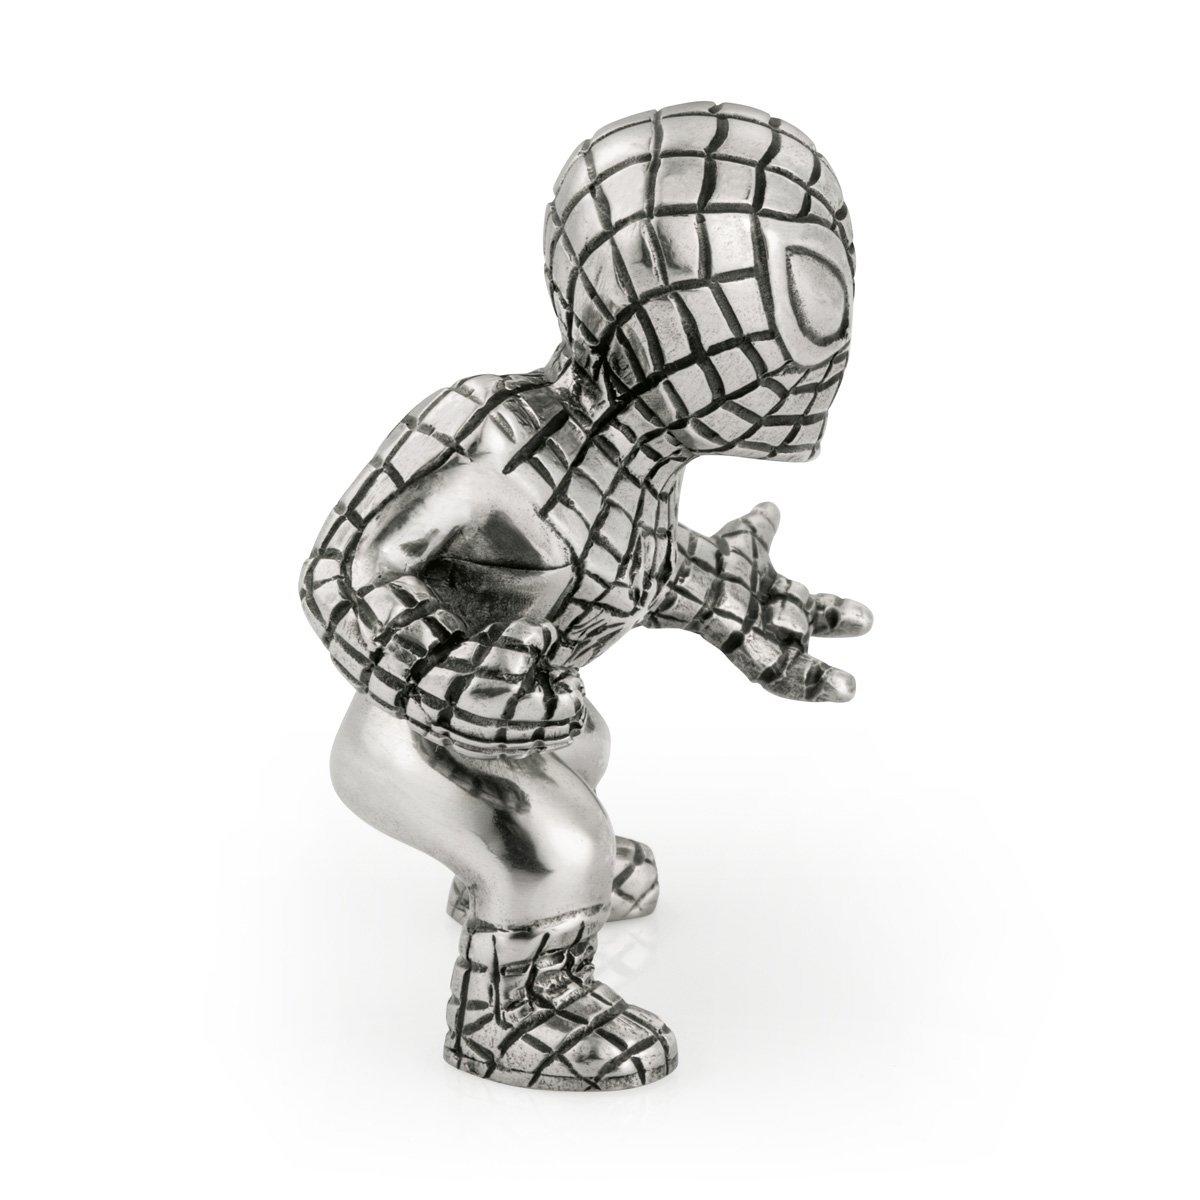 Spider-Man Mini Figurine